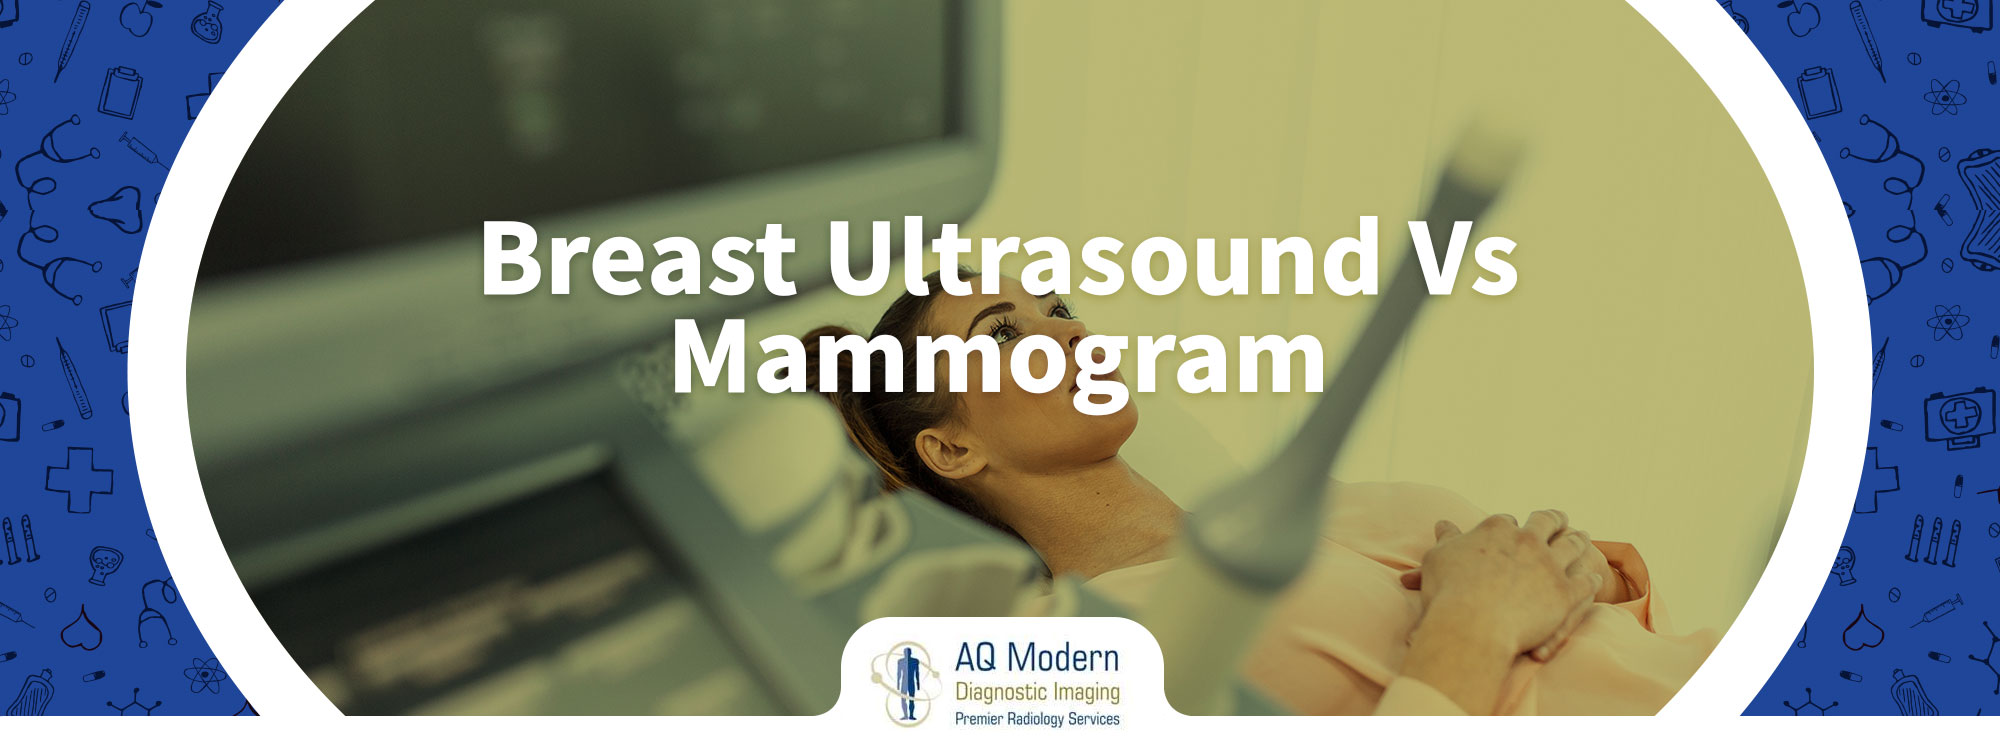 Breast Ultrasound vs. Mammogram